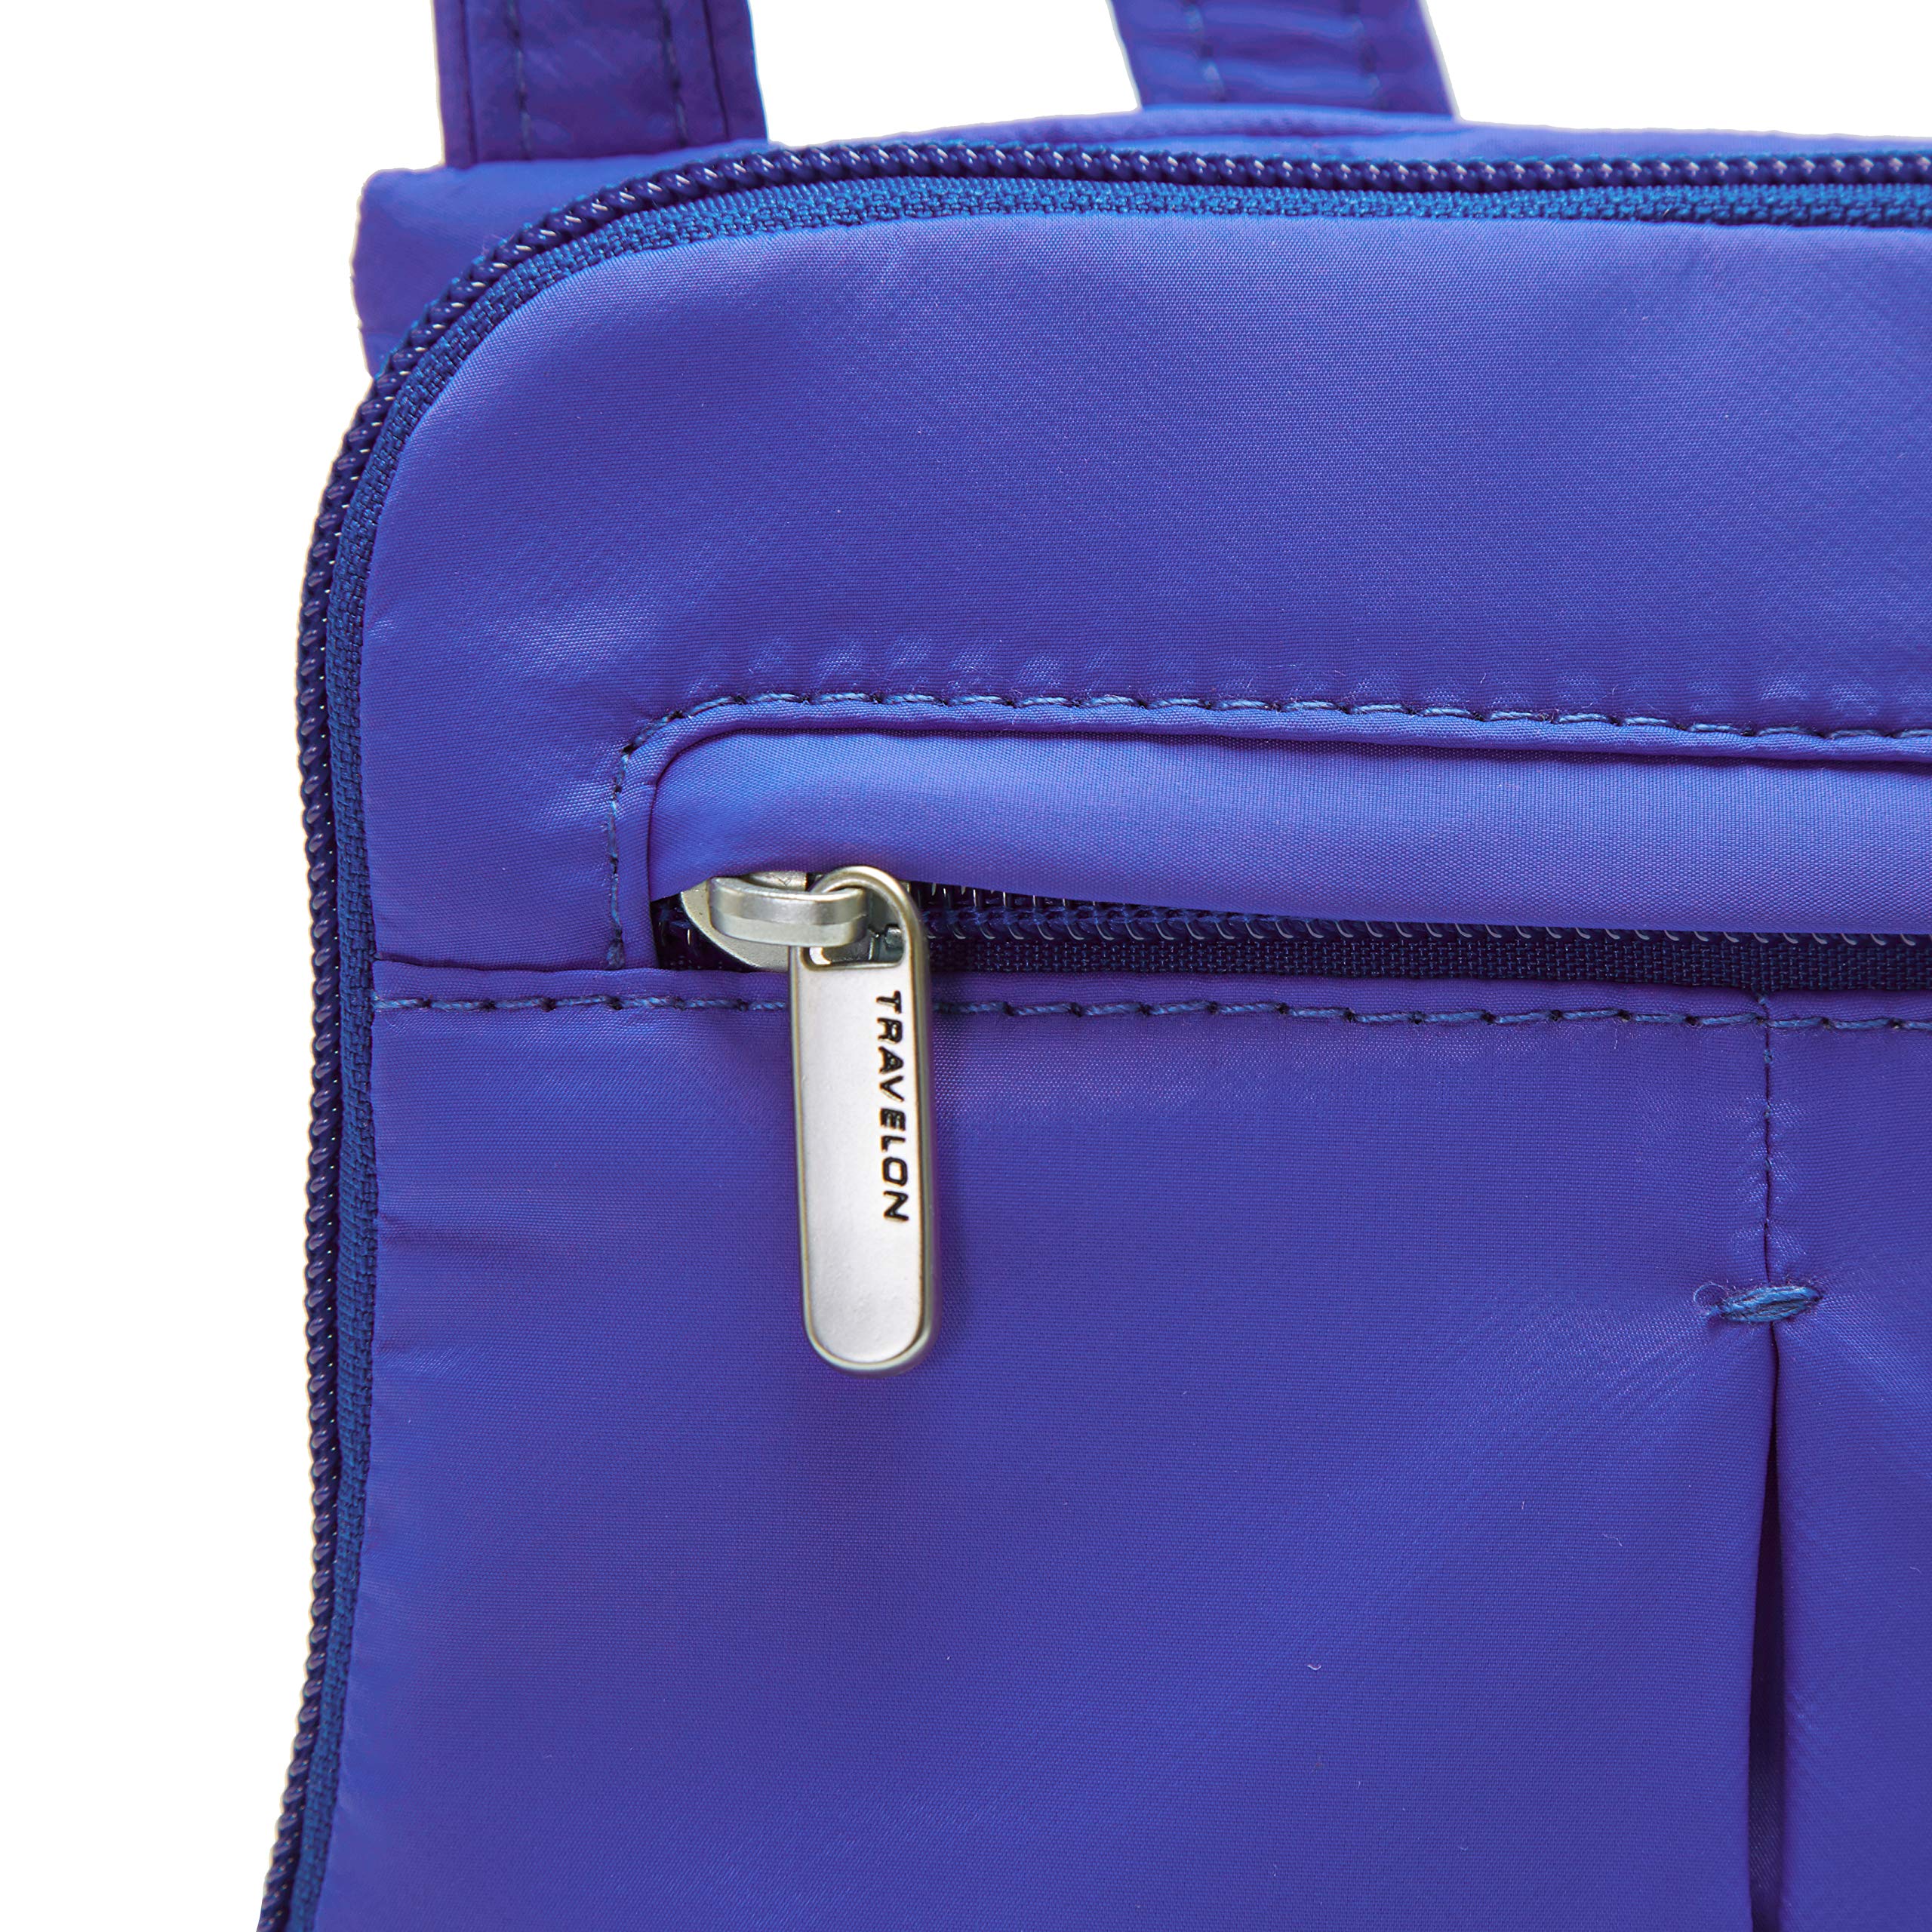 Travelon Anti-Theft Classic Light Mini Crossbody Bag, Lush Blue, One Size